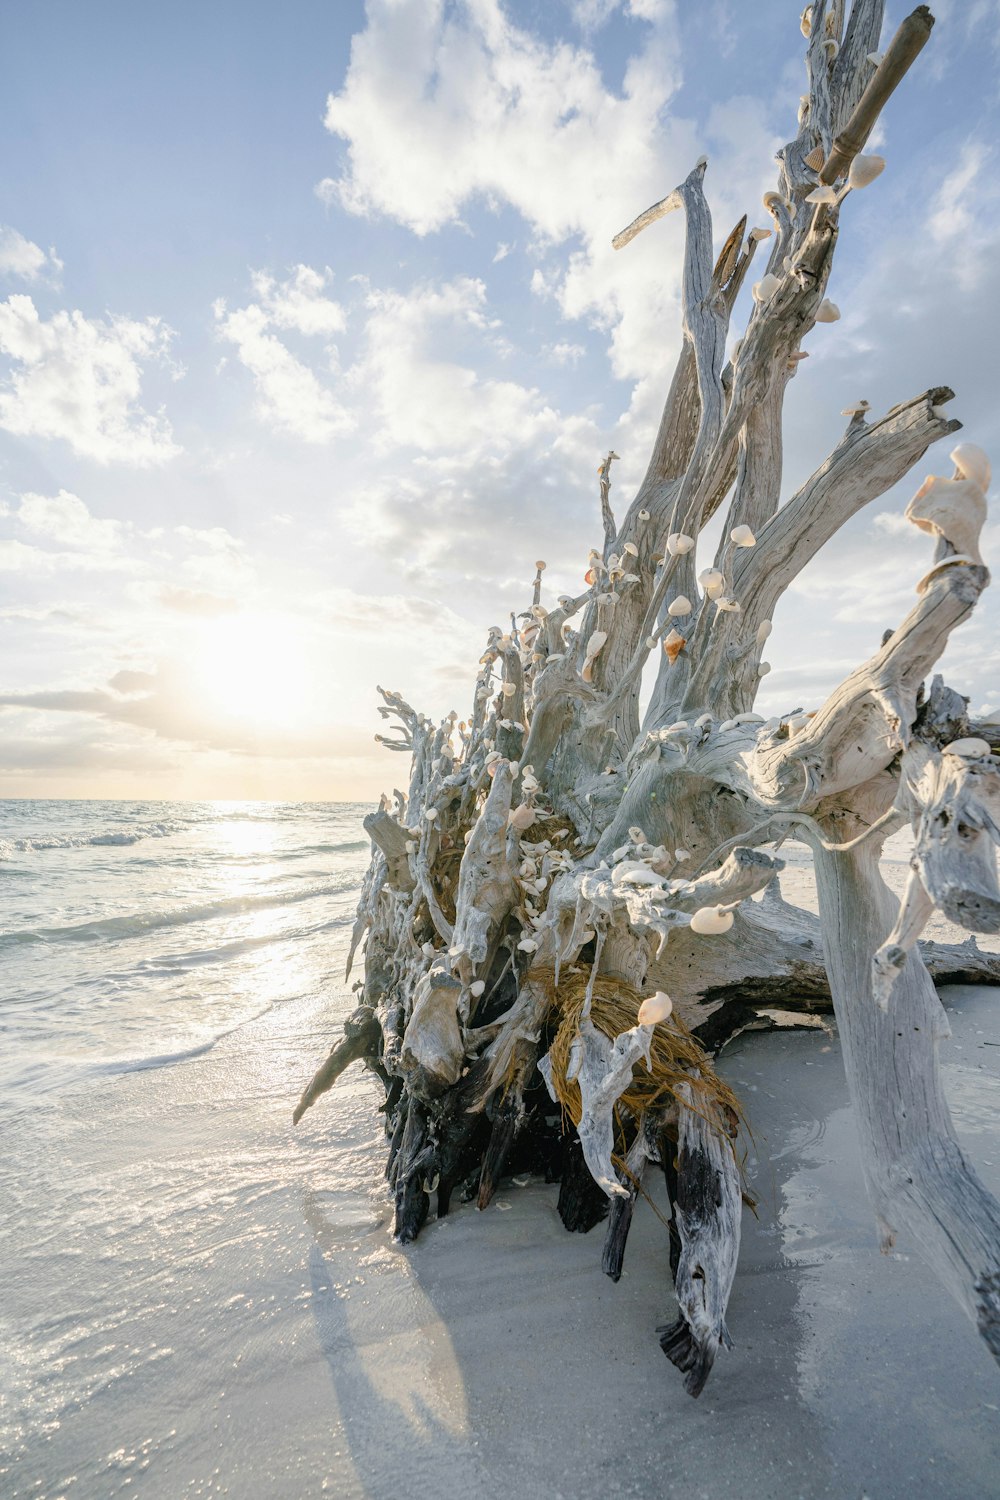 a pile of driftwood on a beach